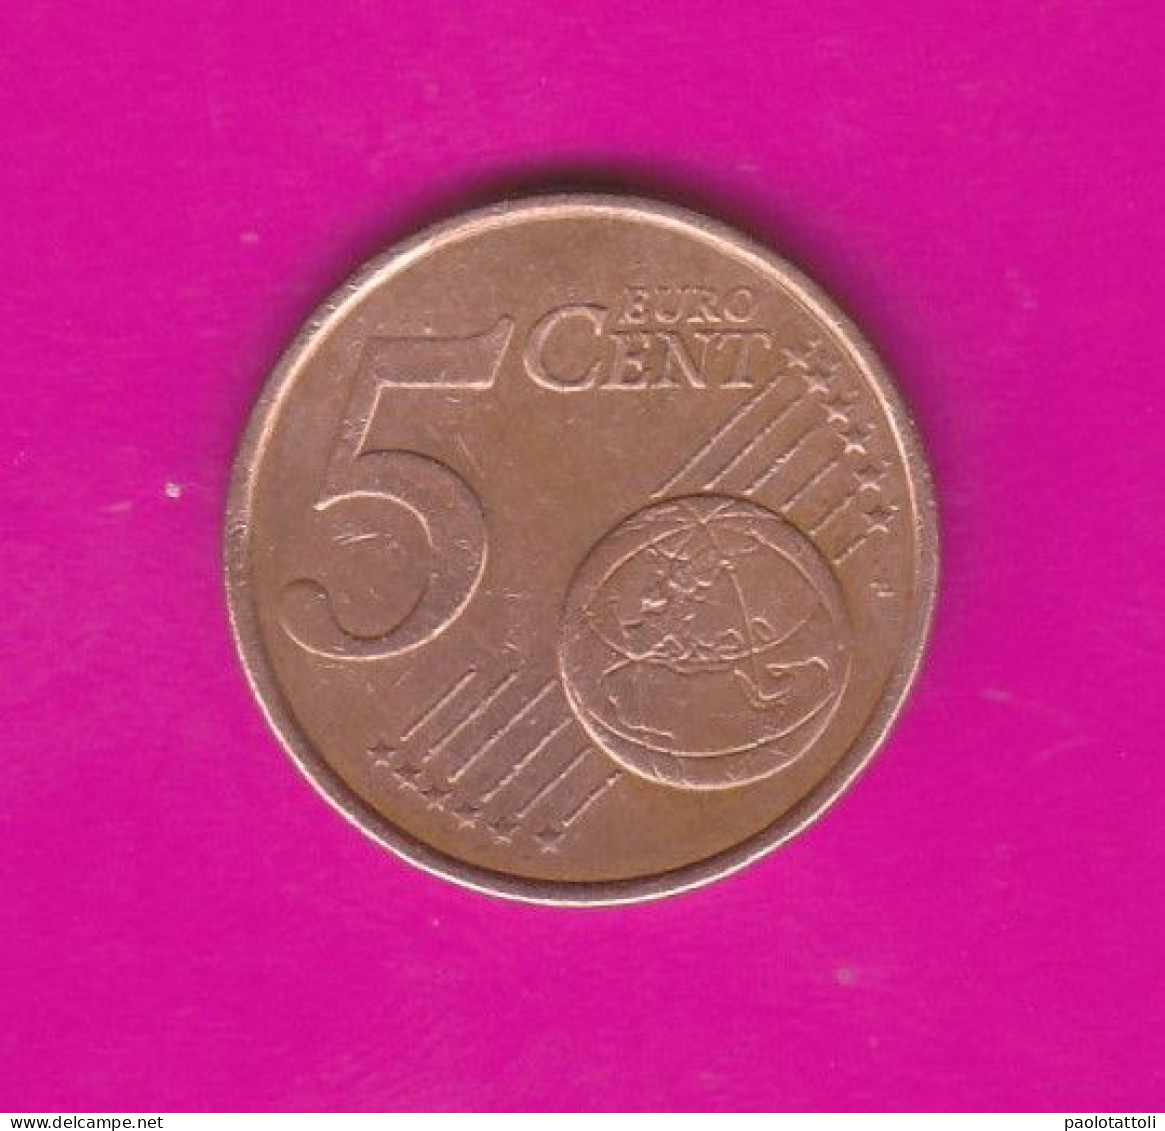 Germany, D 2004- 5 Euro Cent- Nickel Brass- Obverse Oak Leaf. Reverse Denomination- BB, VF, TTB, SS- - Germany